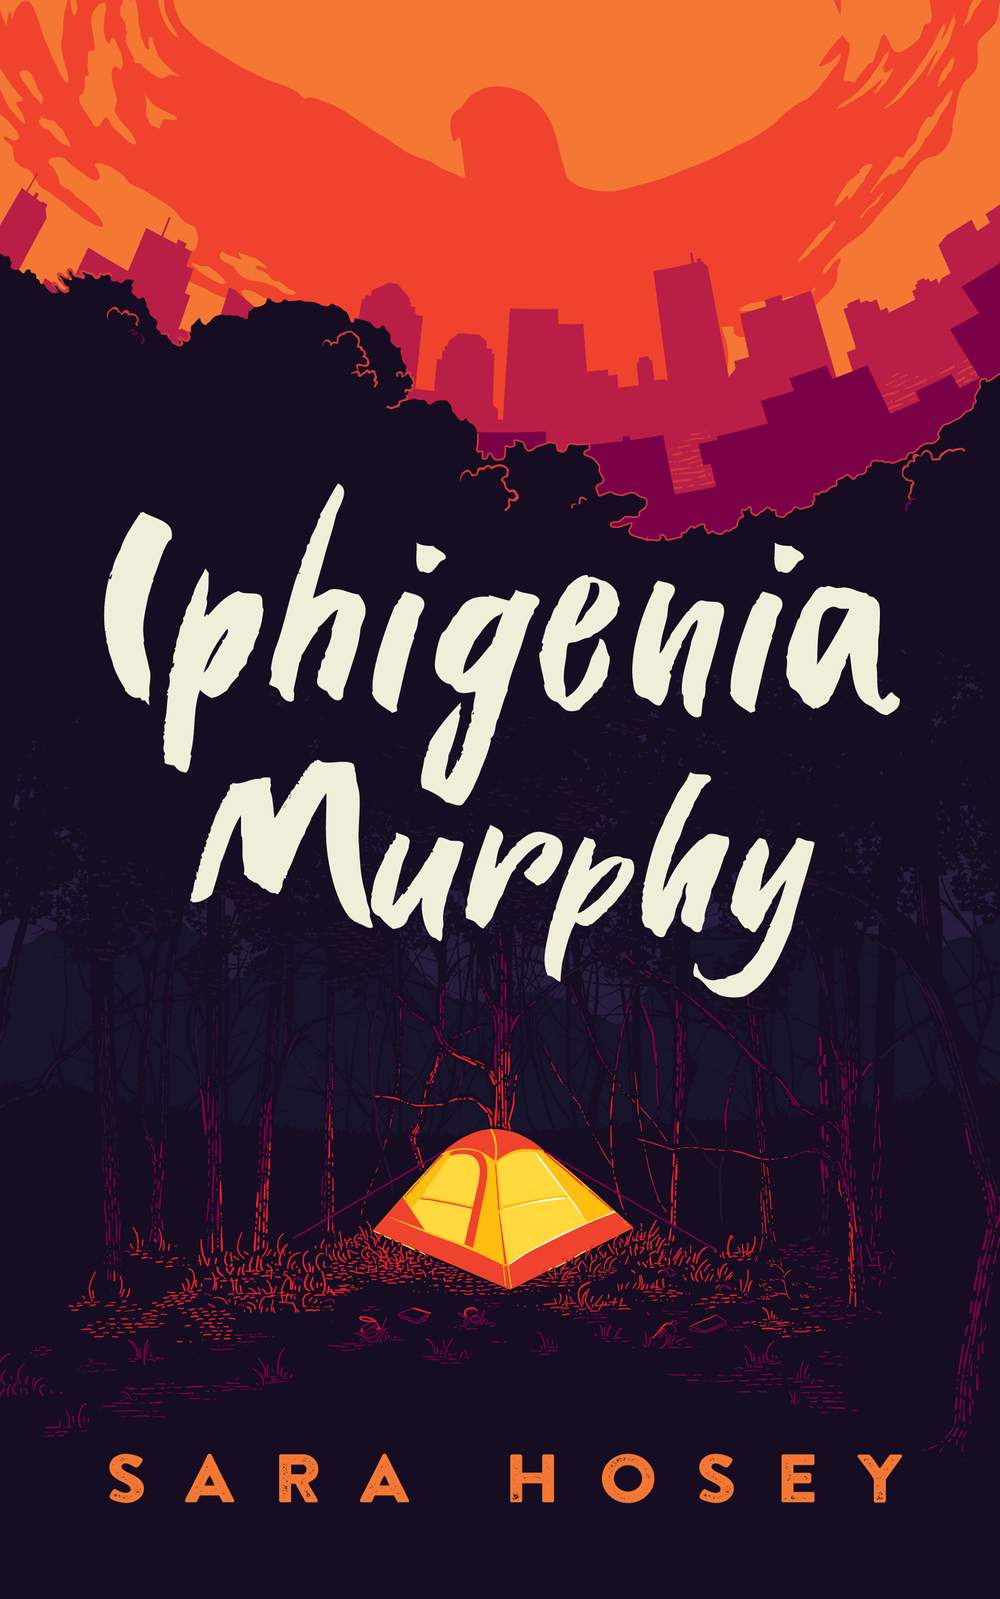 Iphigenia Murphy by Sara Hosey